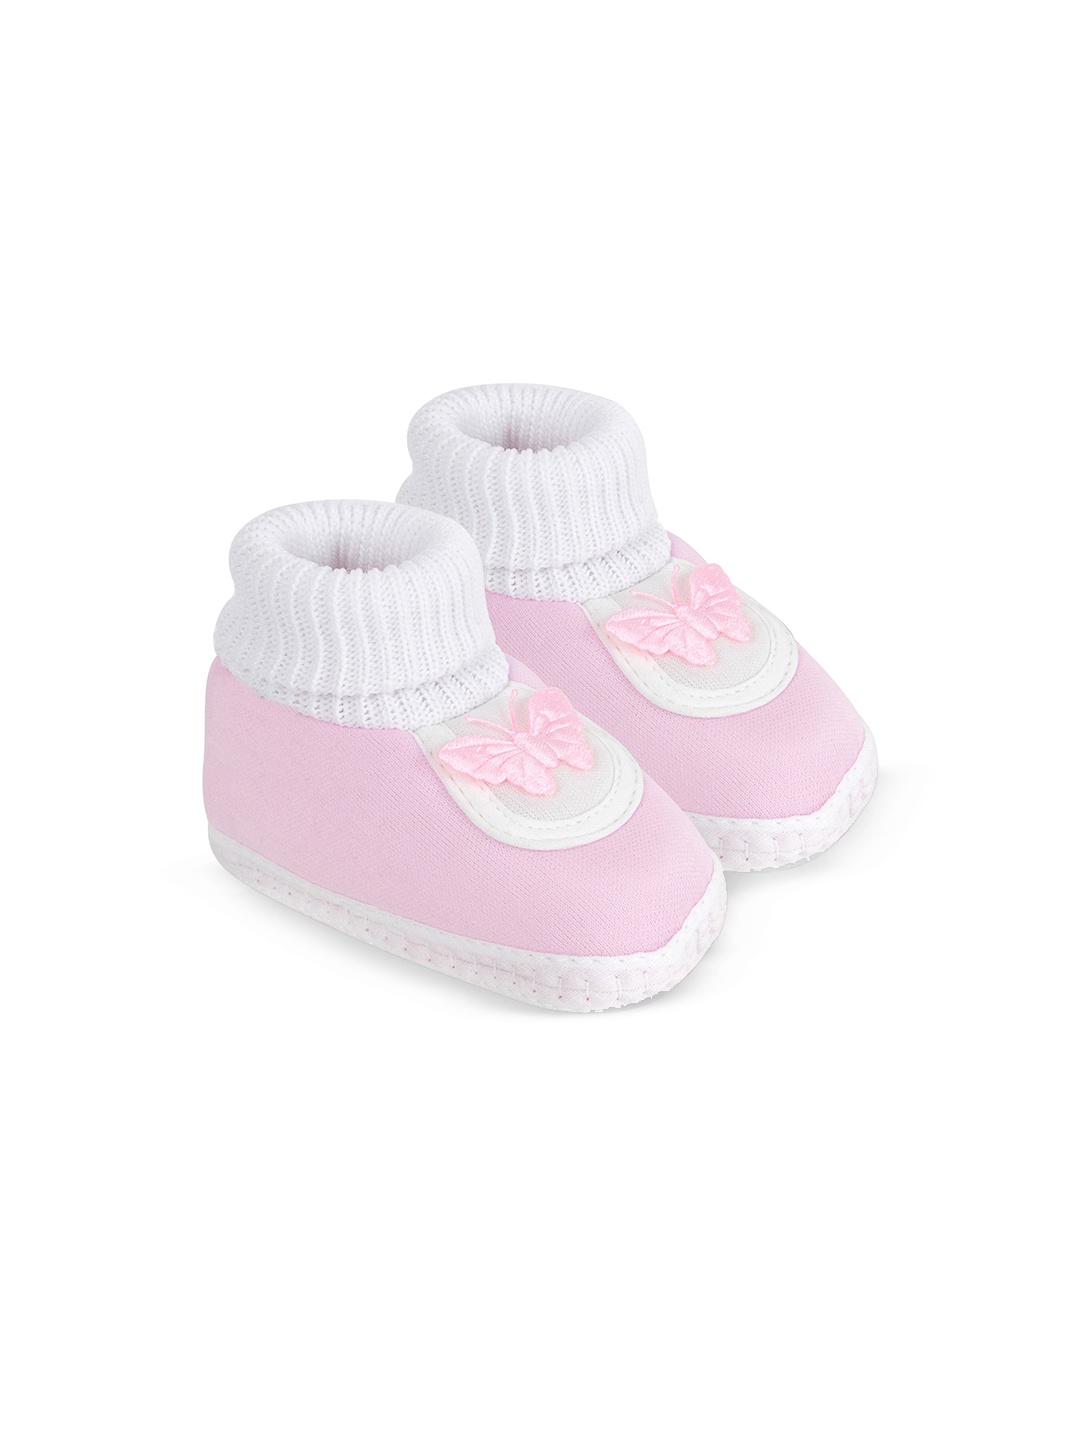 

BAESD Infants Cotton Booties, Pink